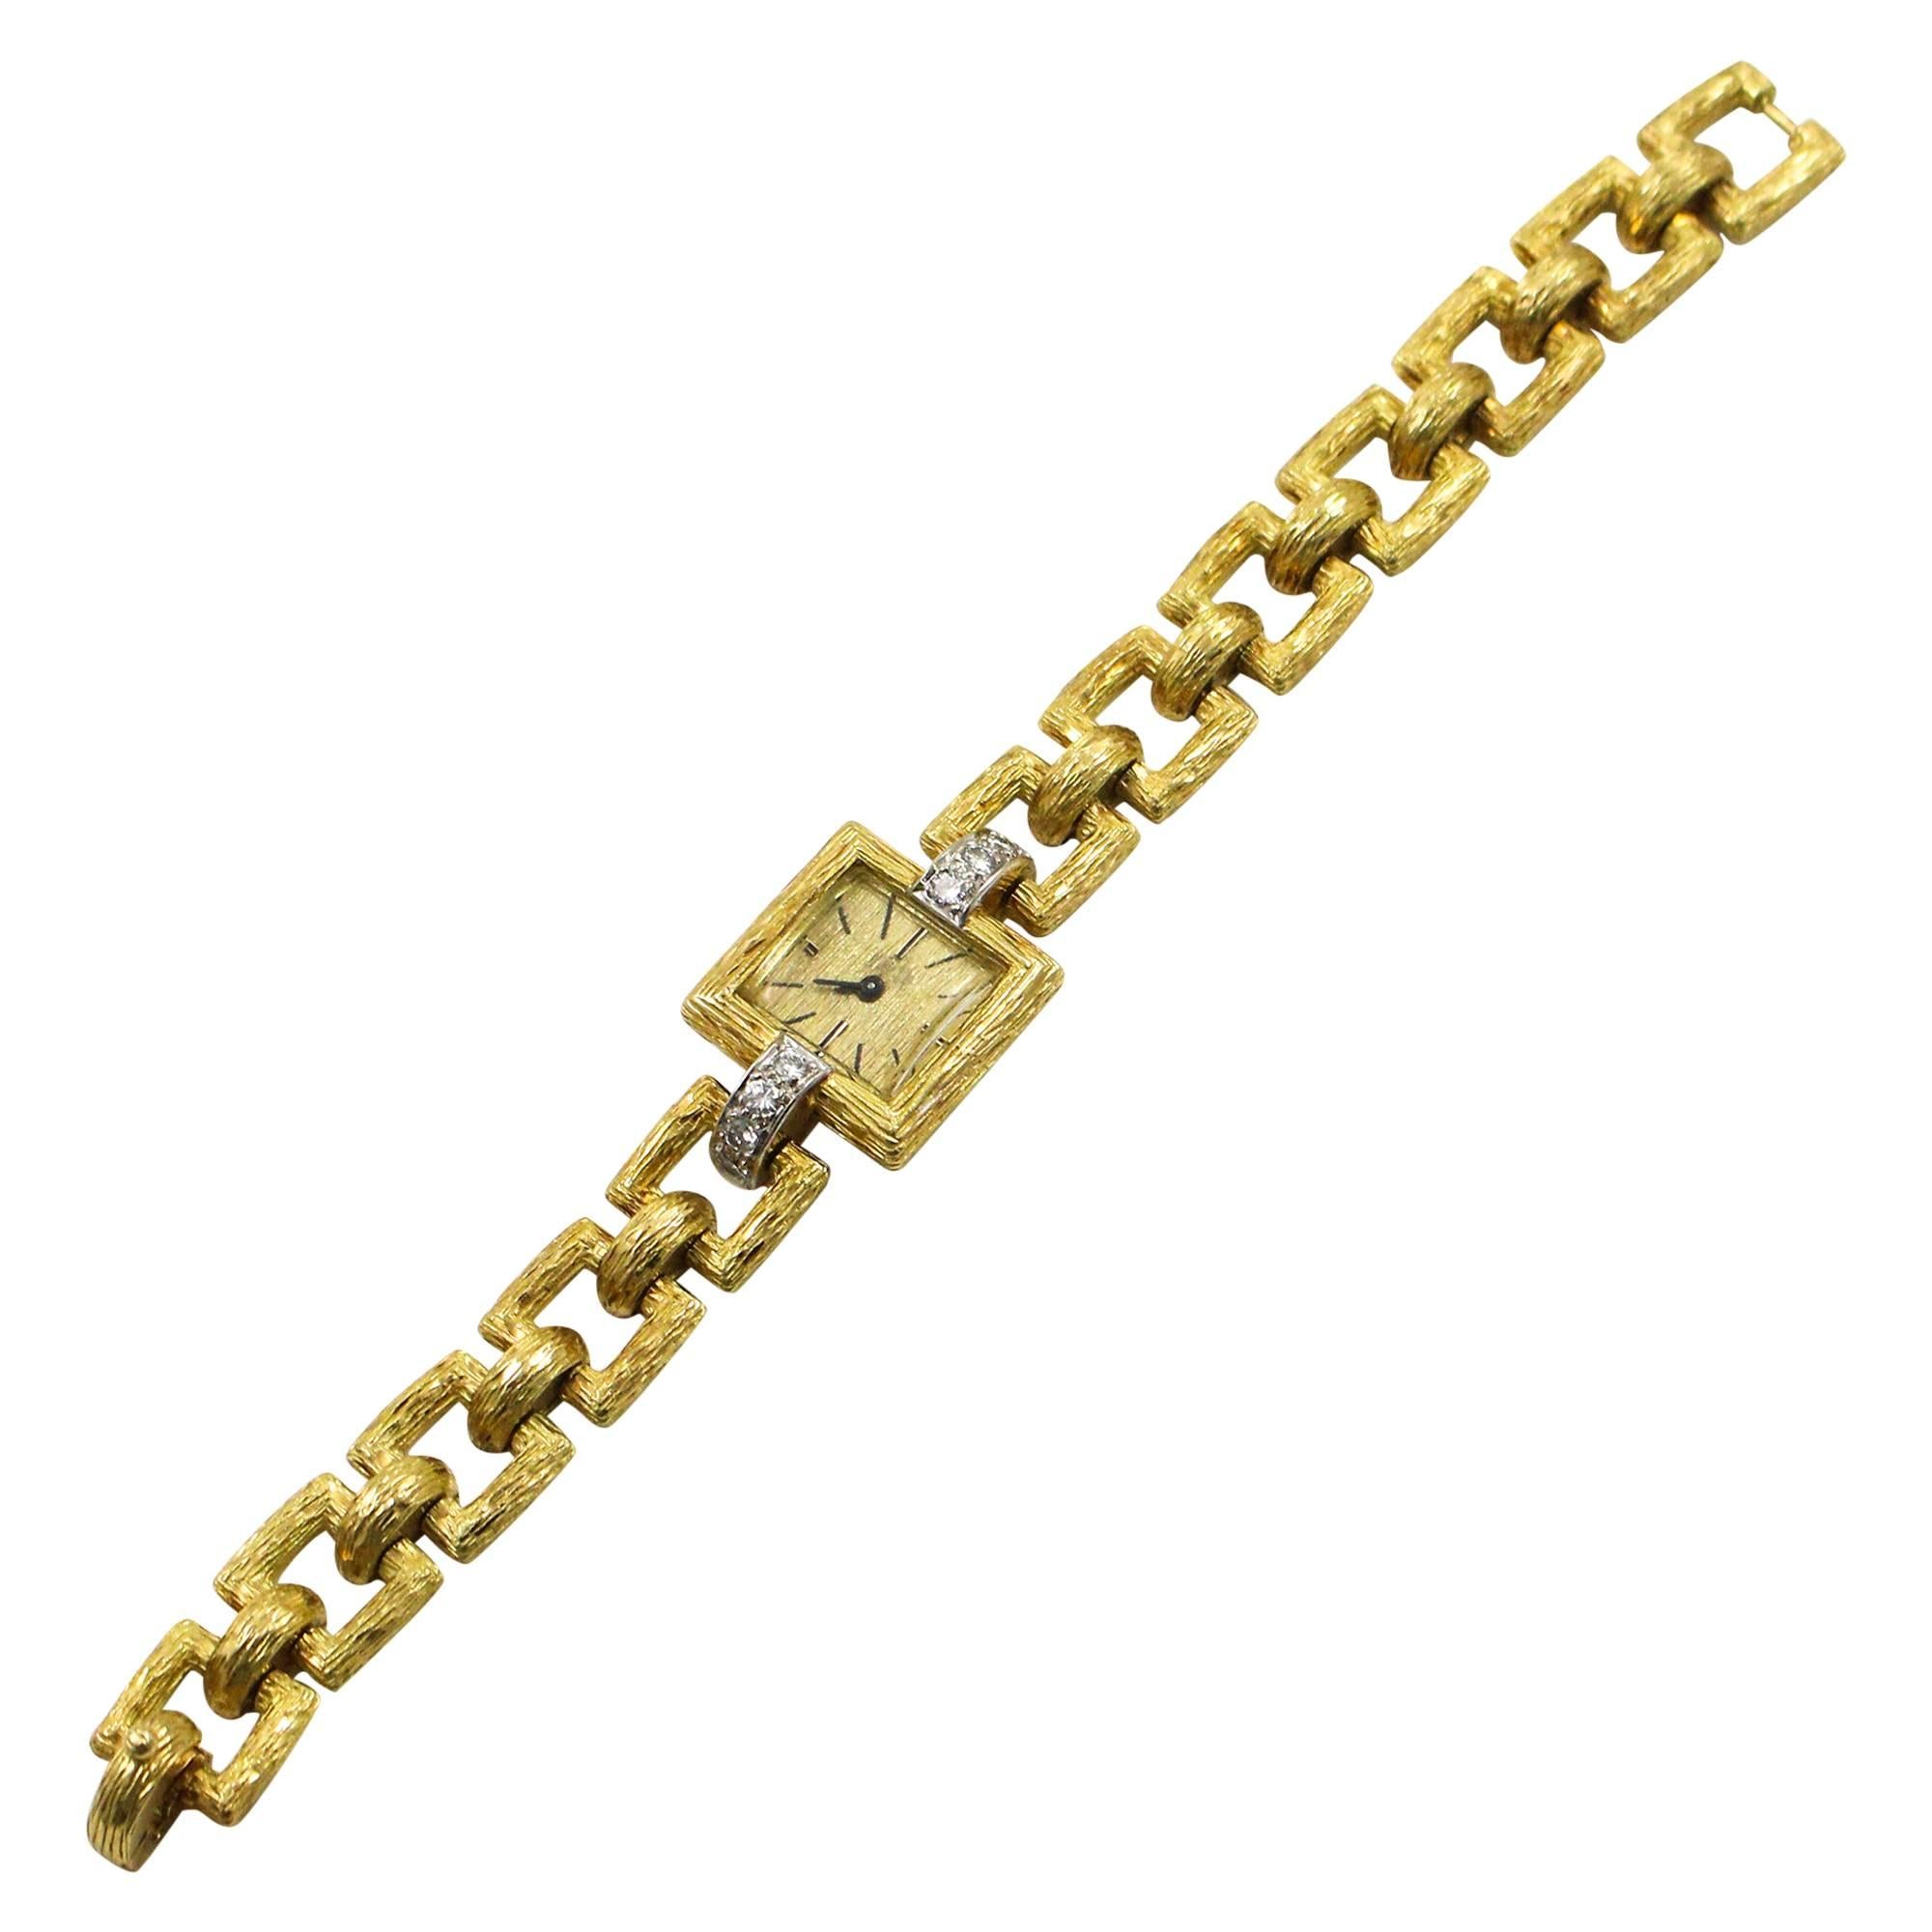 60s-70s Modernist 18k Yellow Gold and Diamond Mido Watch